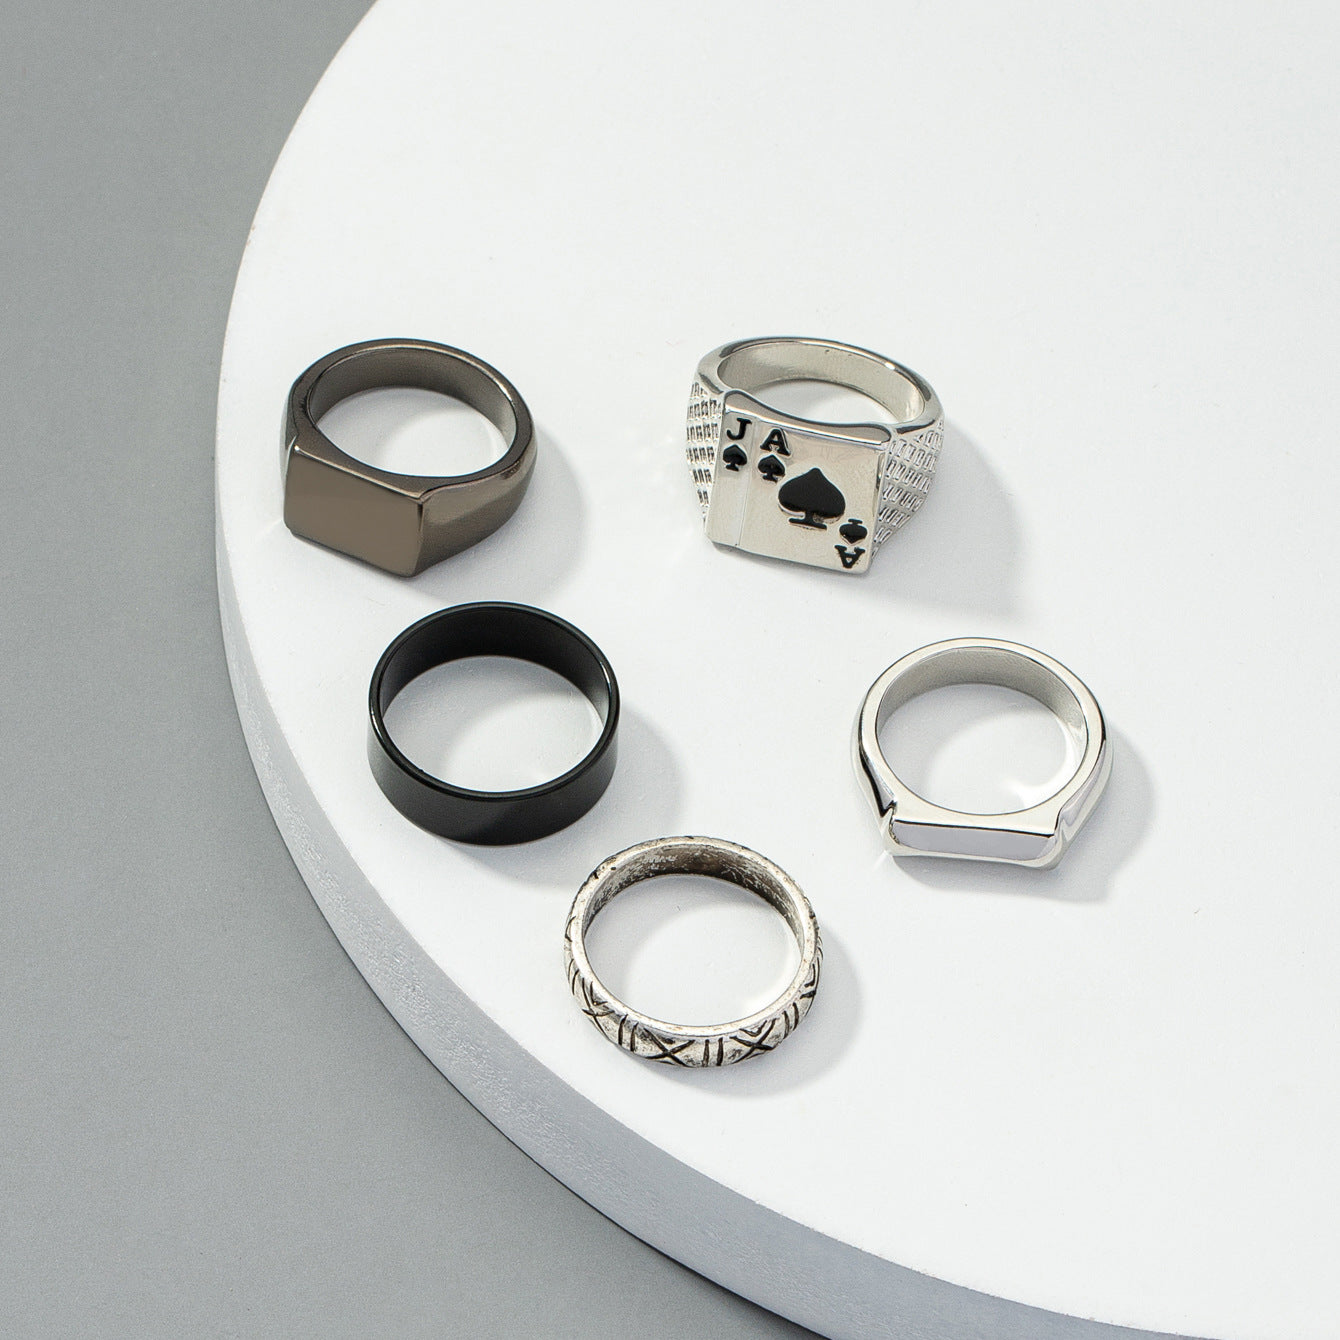 5-Piece Men's Metal Ring Set with Poker Stripe and Cross-Border Design